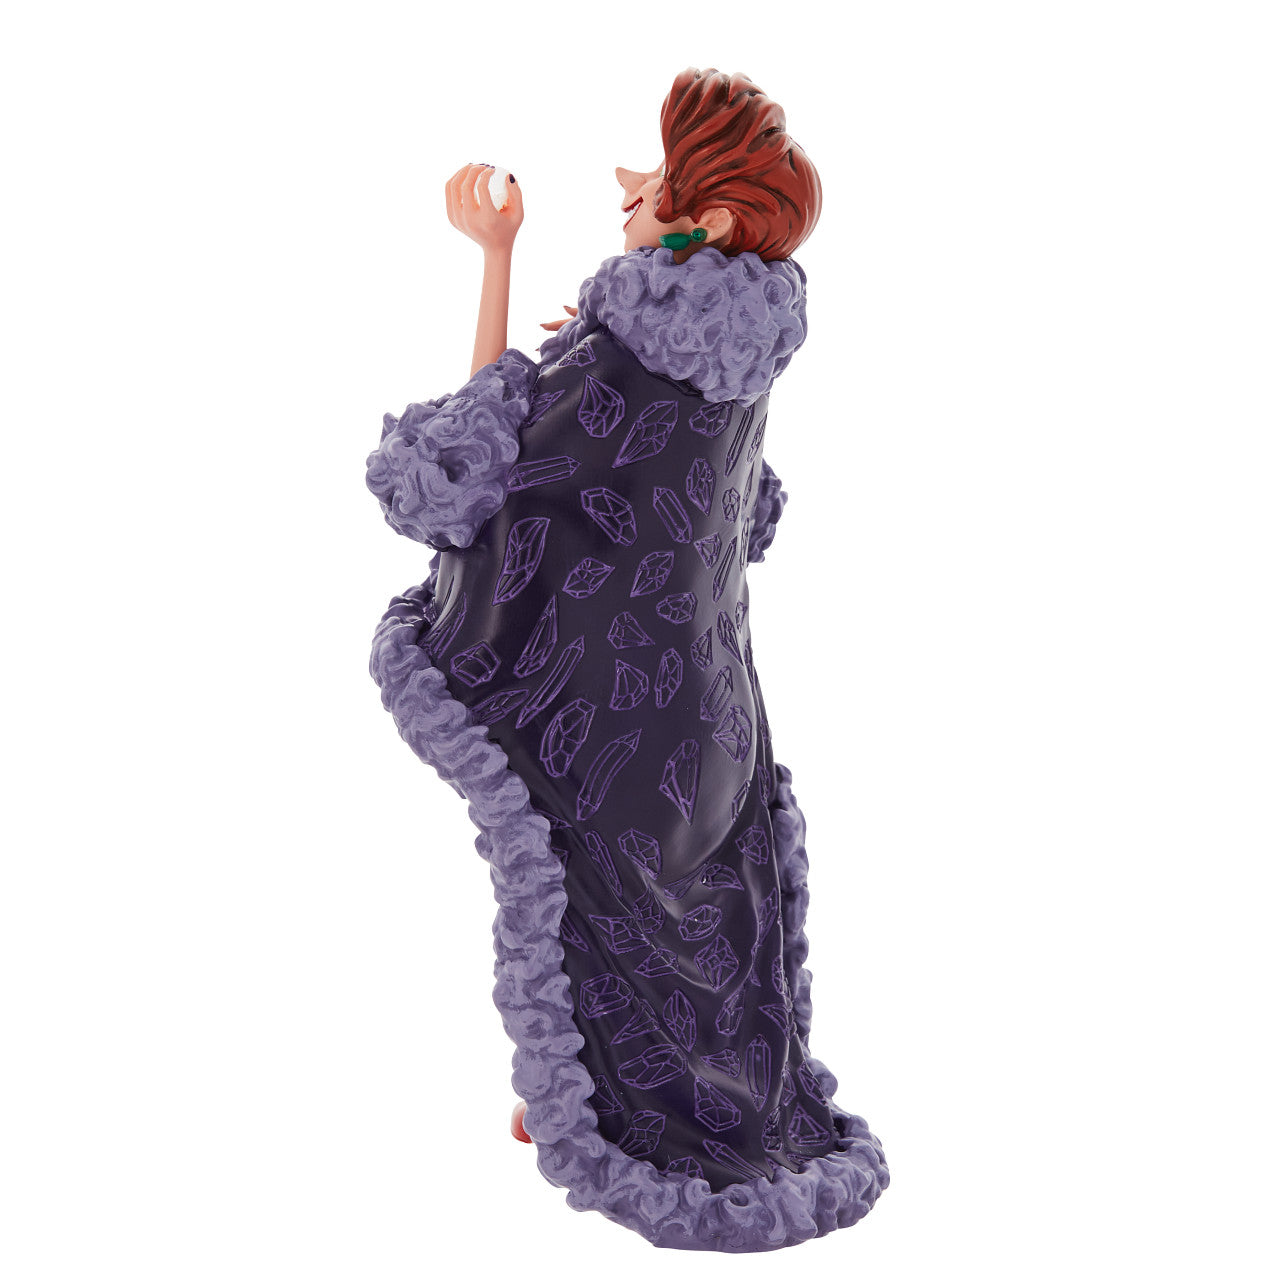 Madame Medusa Figurine